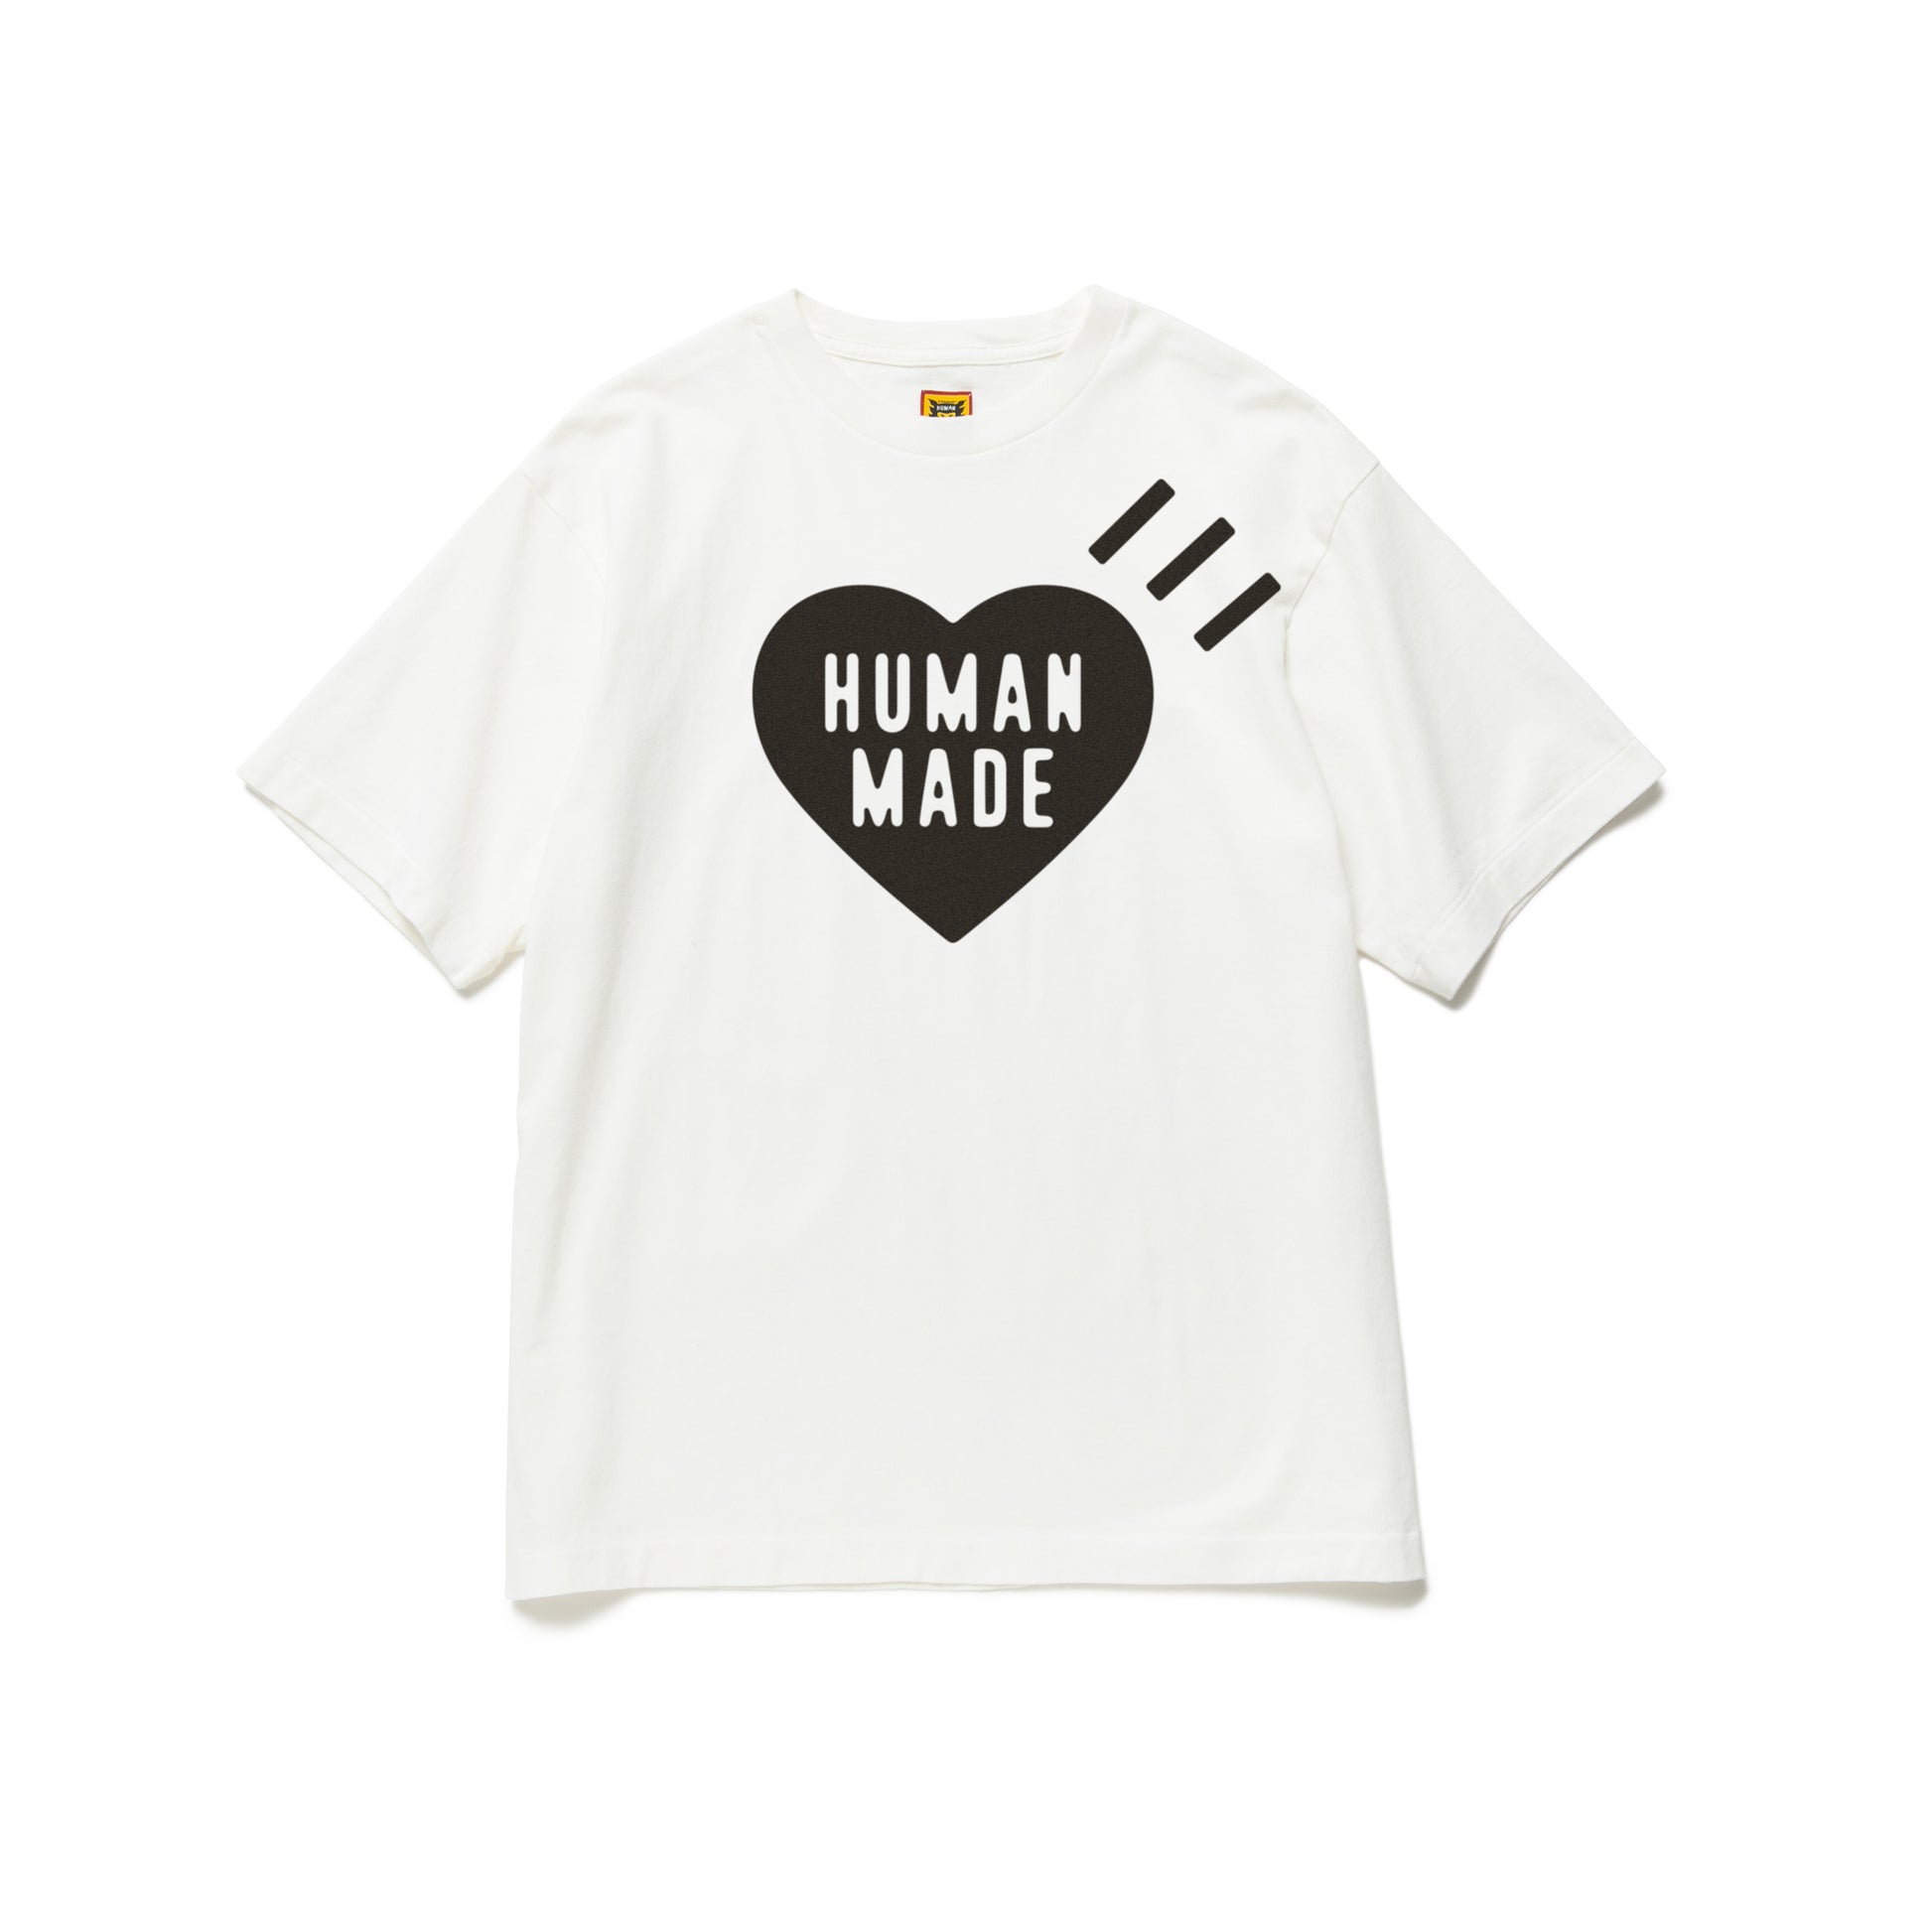 ????HUMANMADE シャツ????